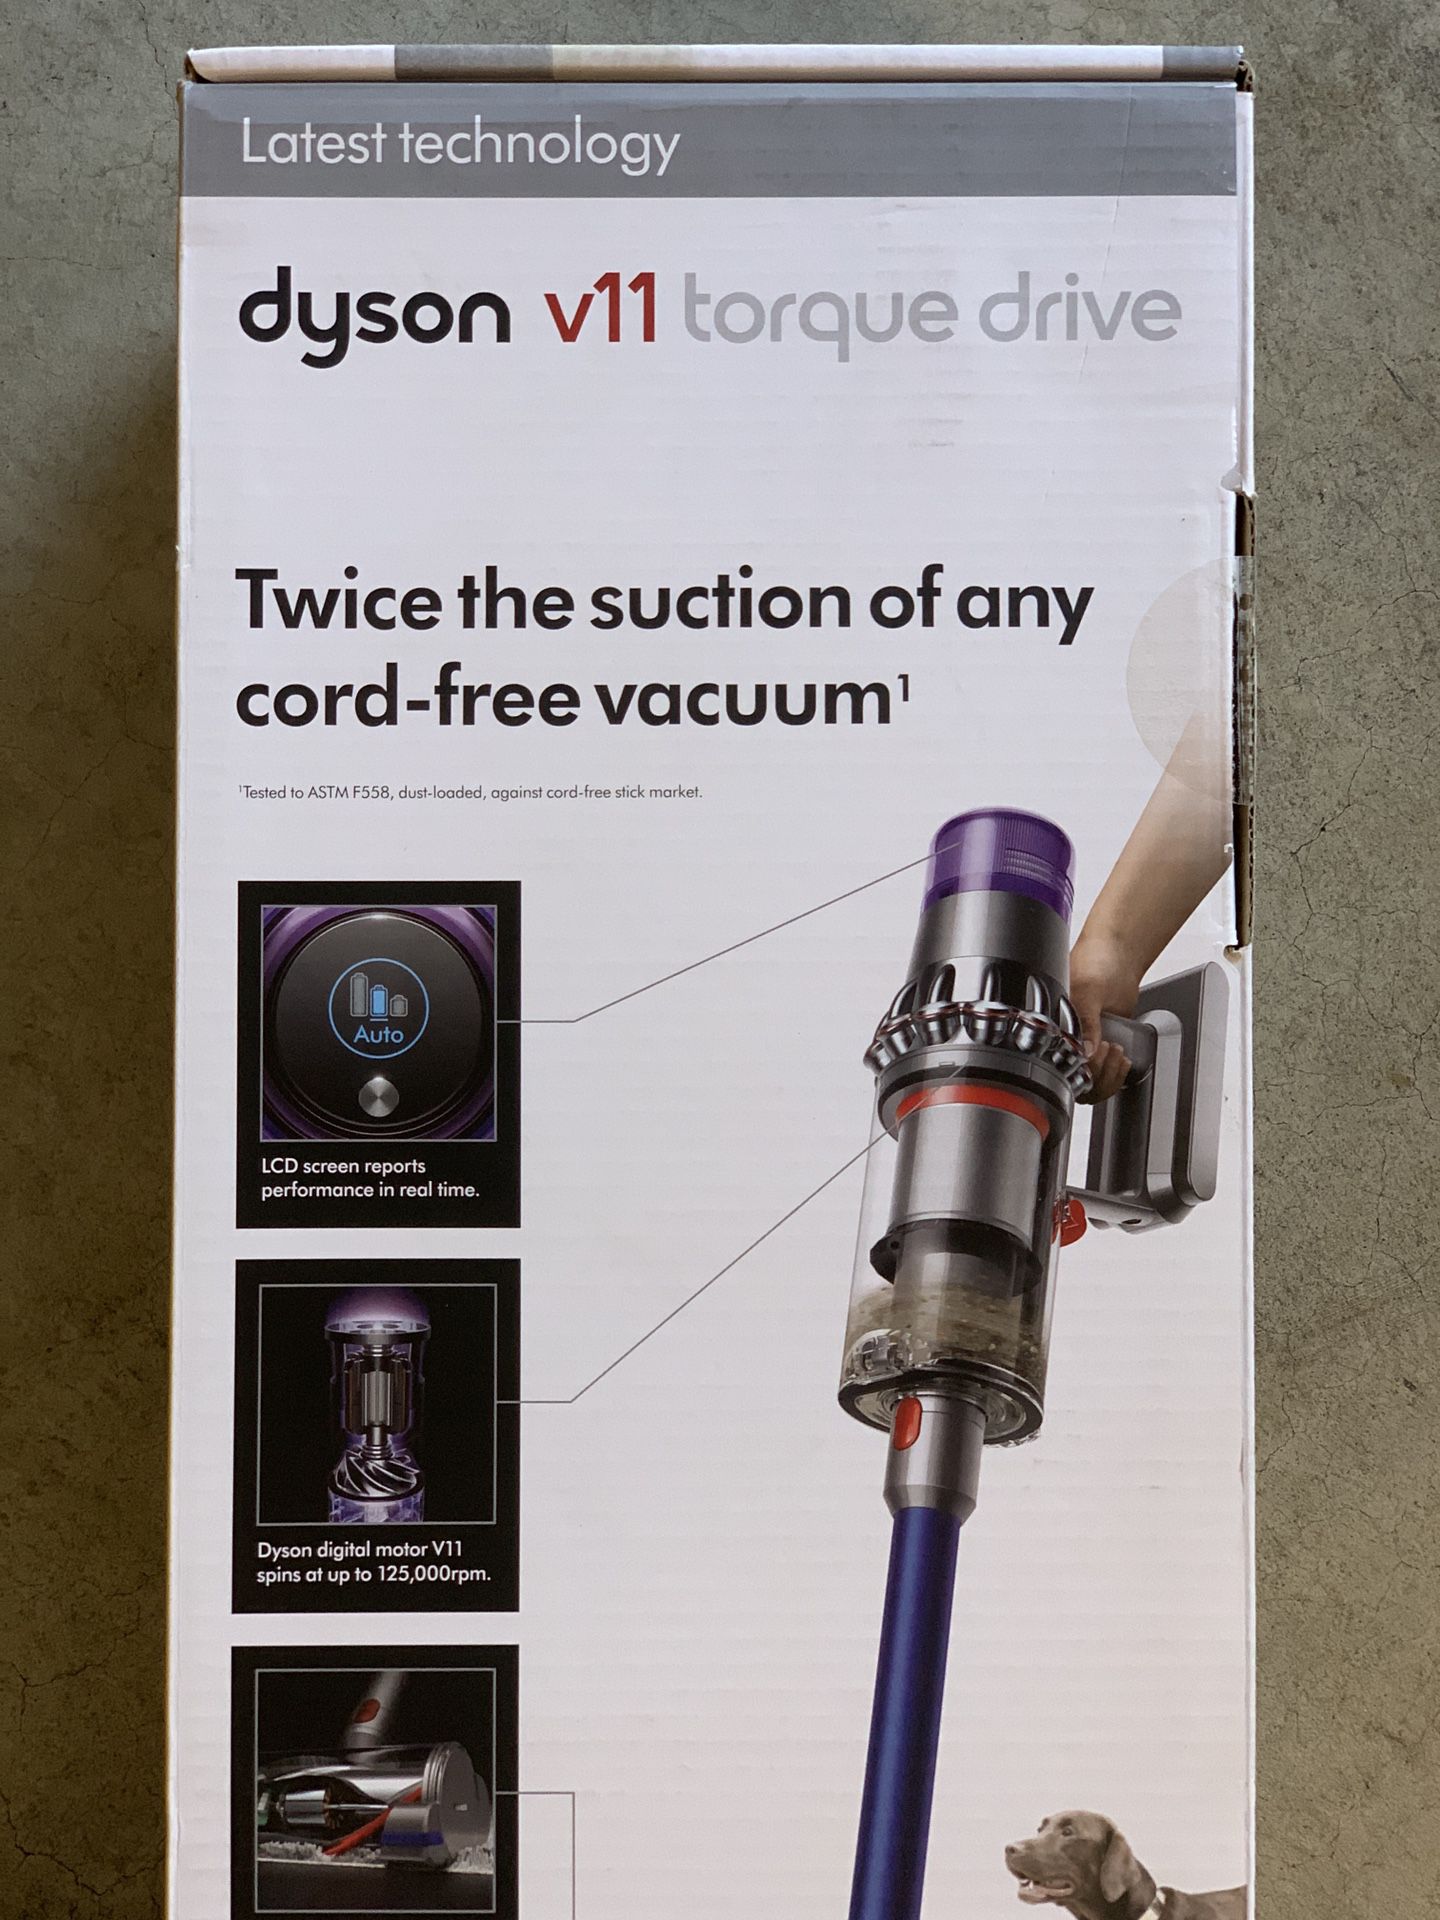 Dyson v11 torque drive cordless vacuum new